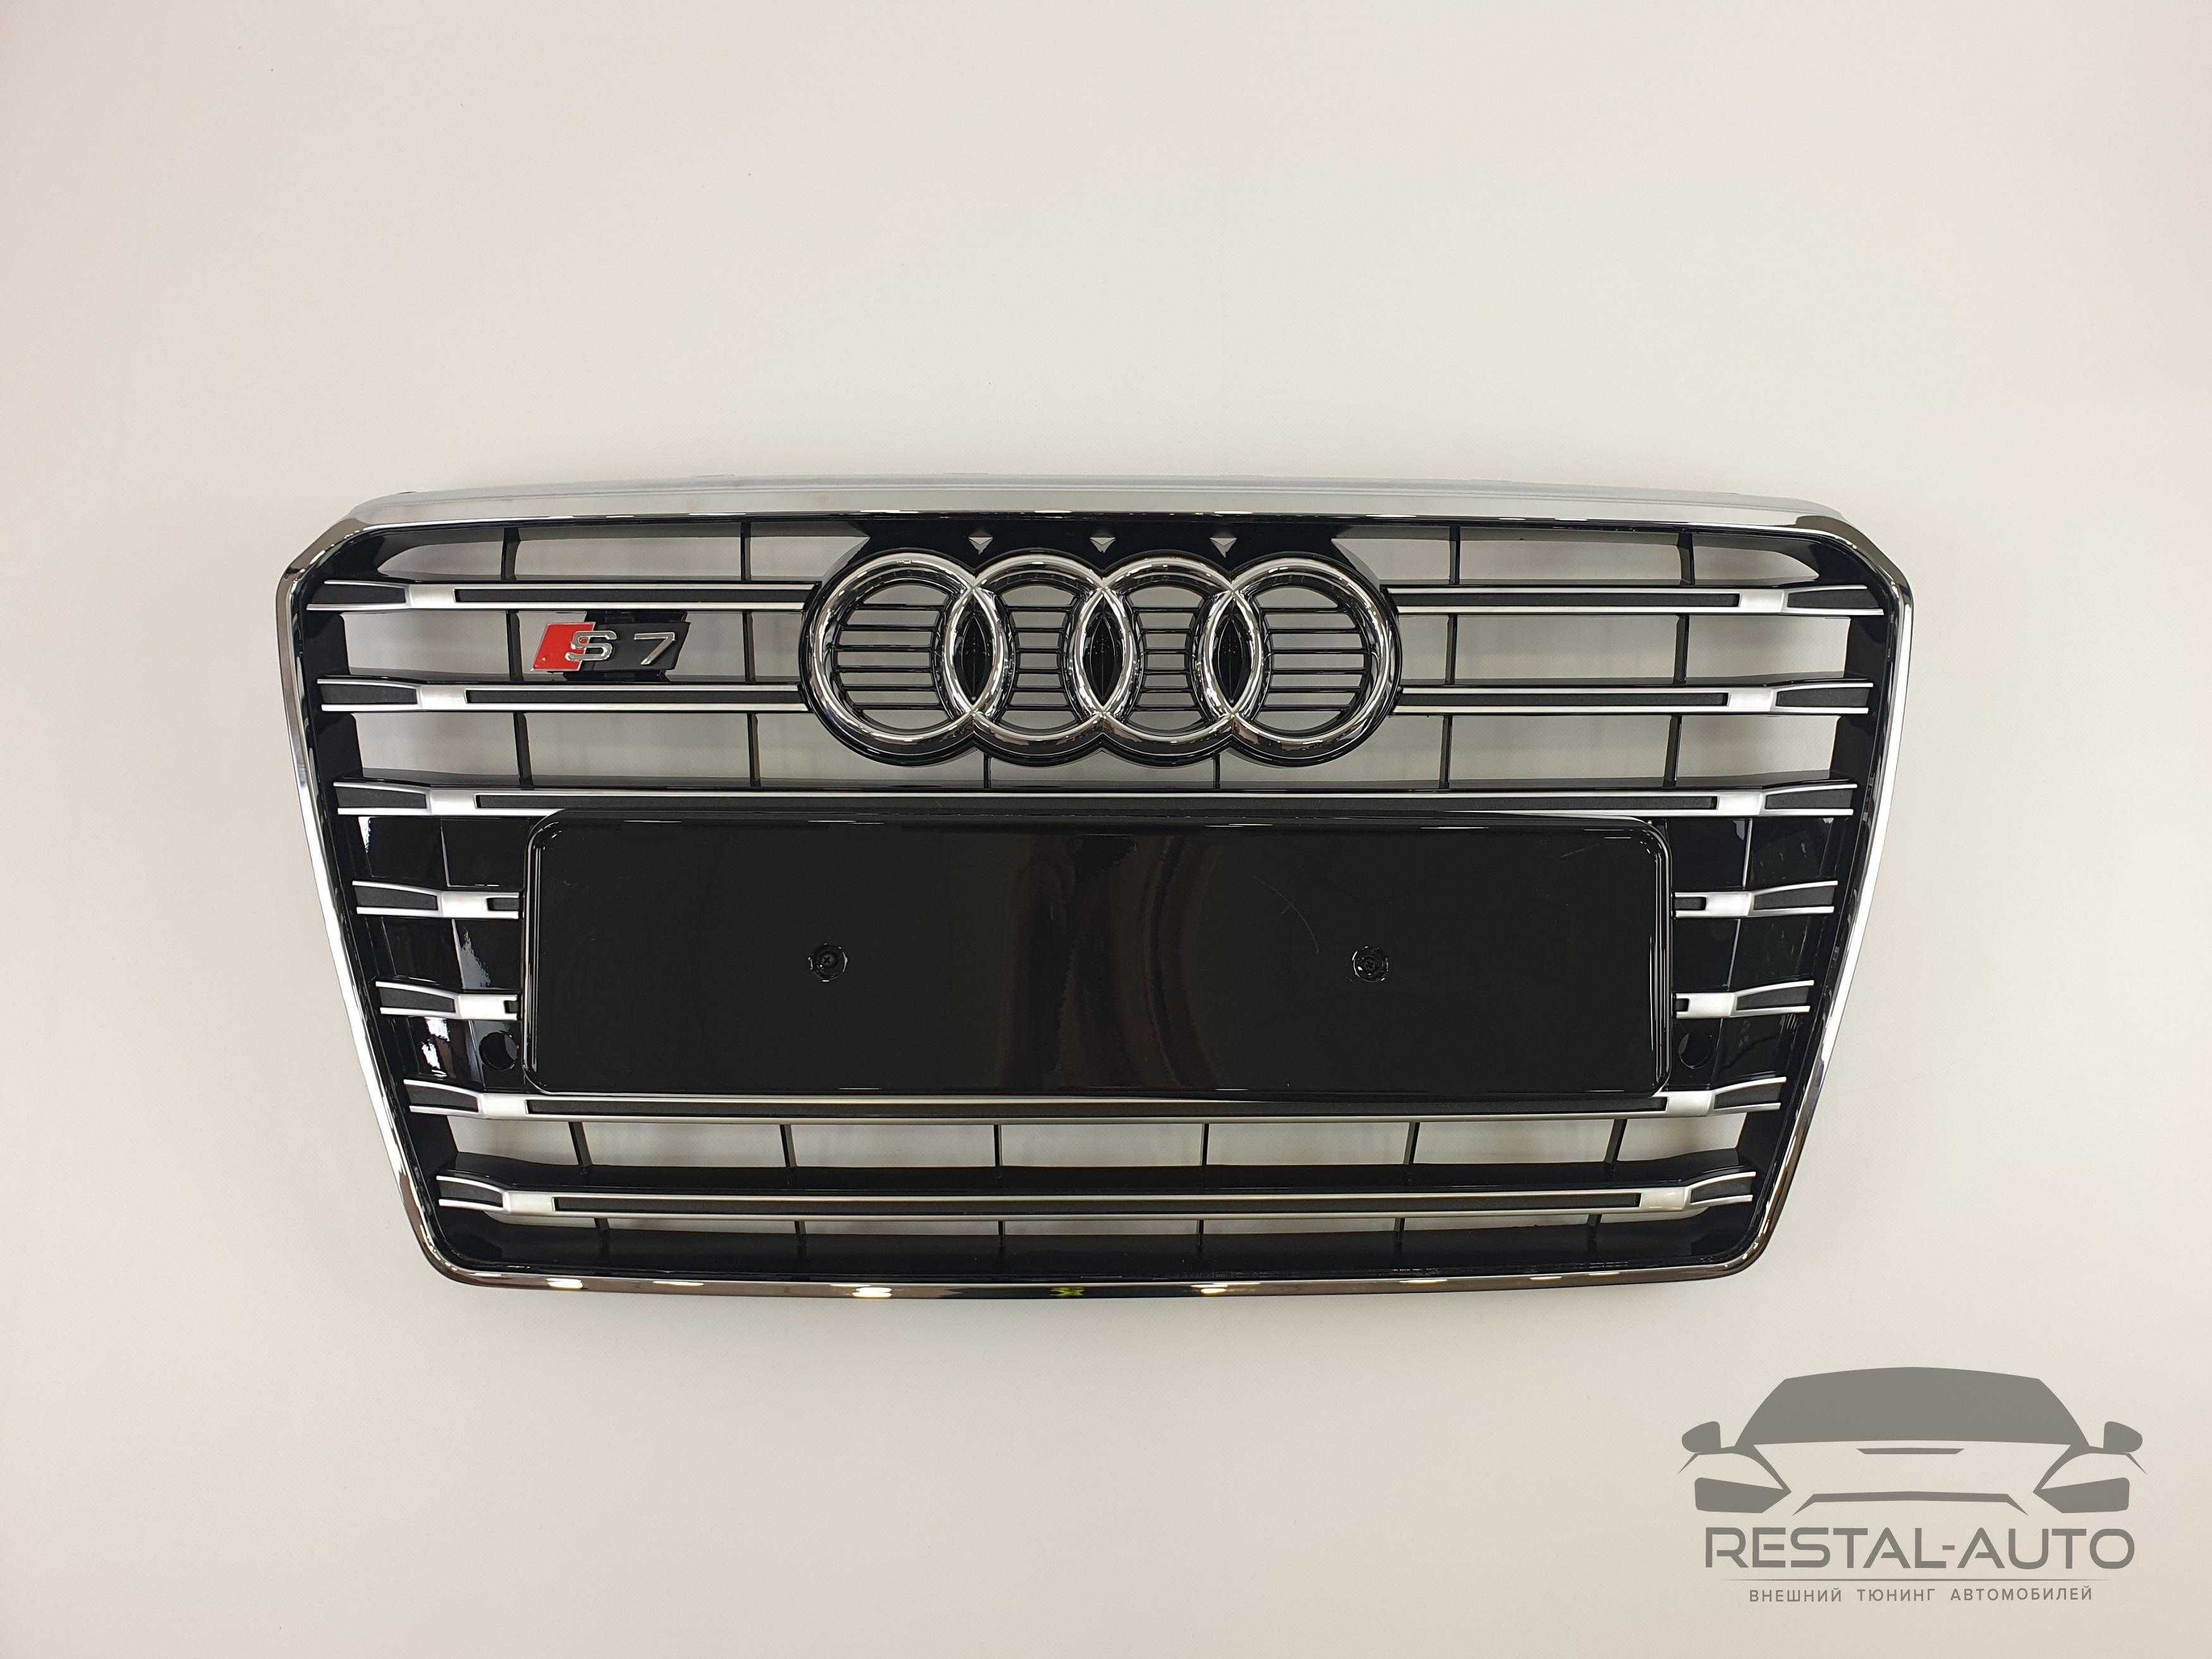 Решетка Радиатора Audi A7 2010-2014г в стиле S-line